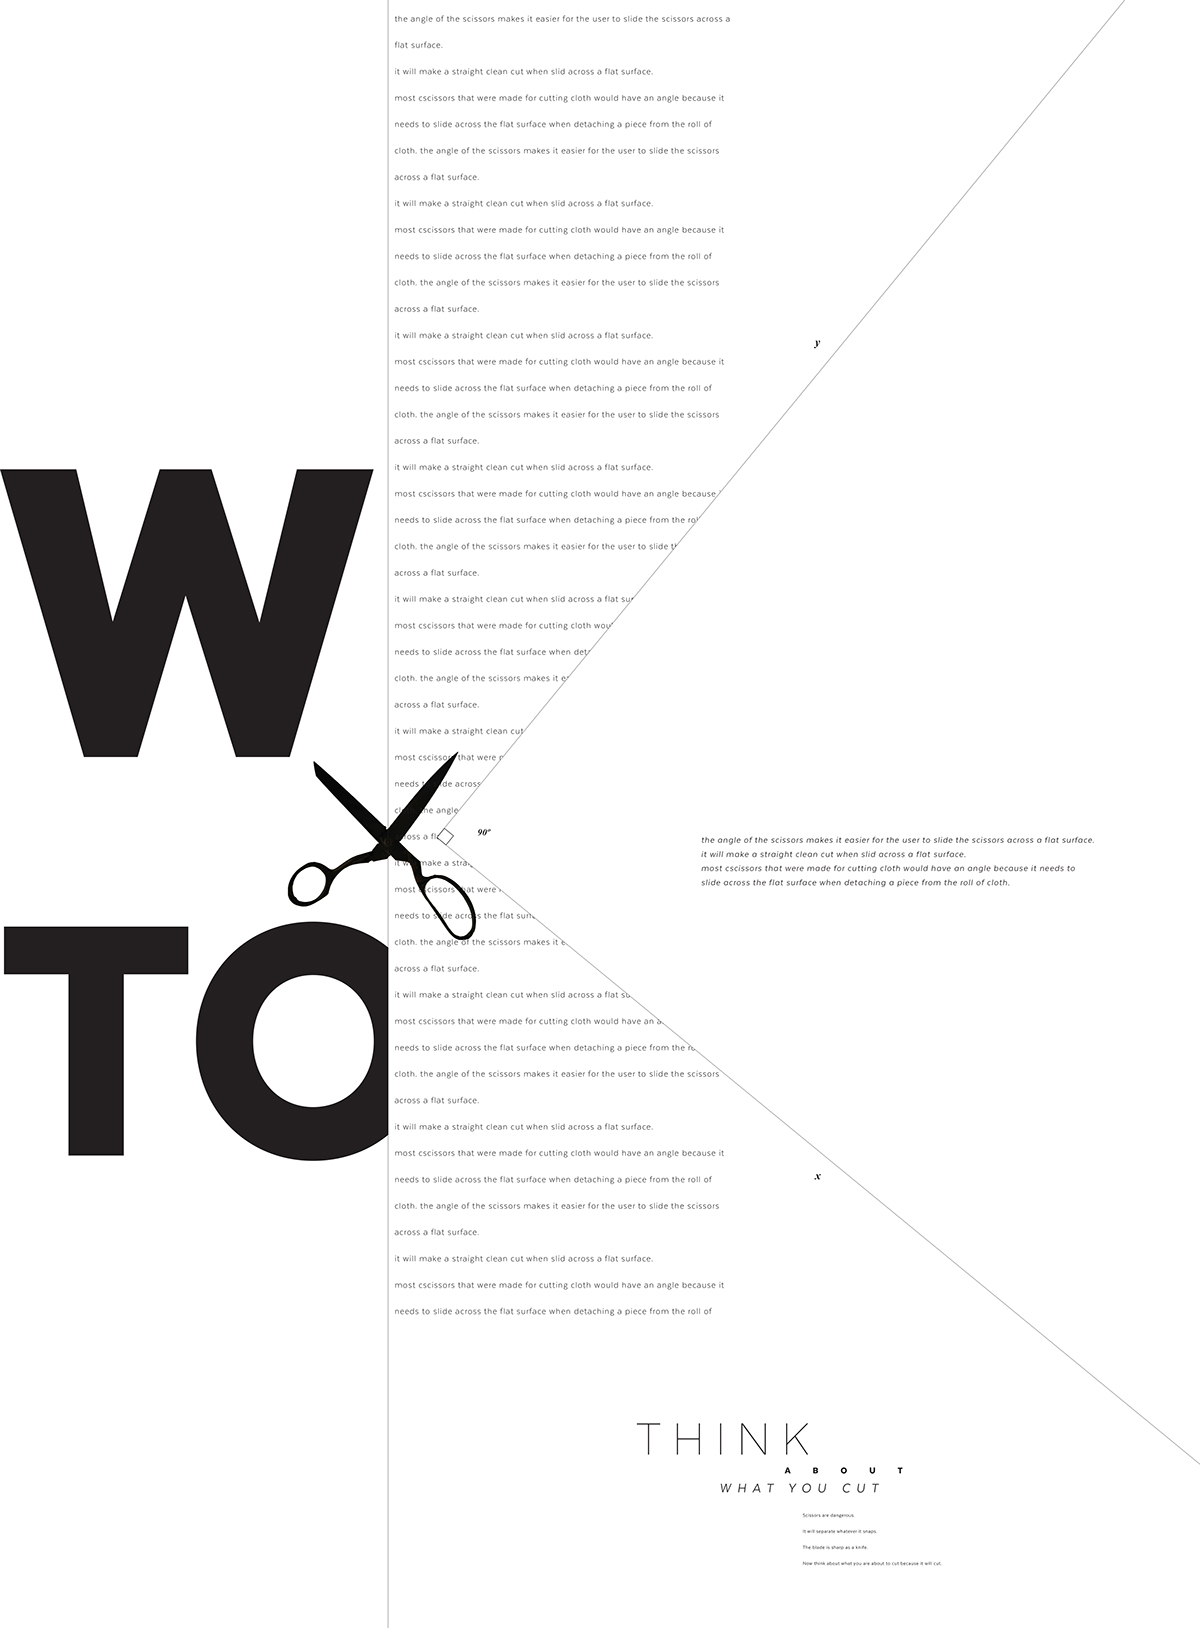 Visual Communications scissors Poster series installation